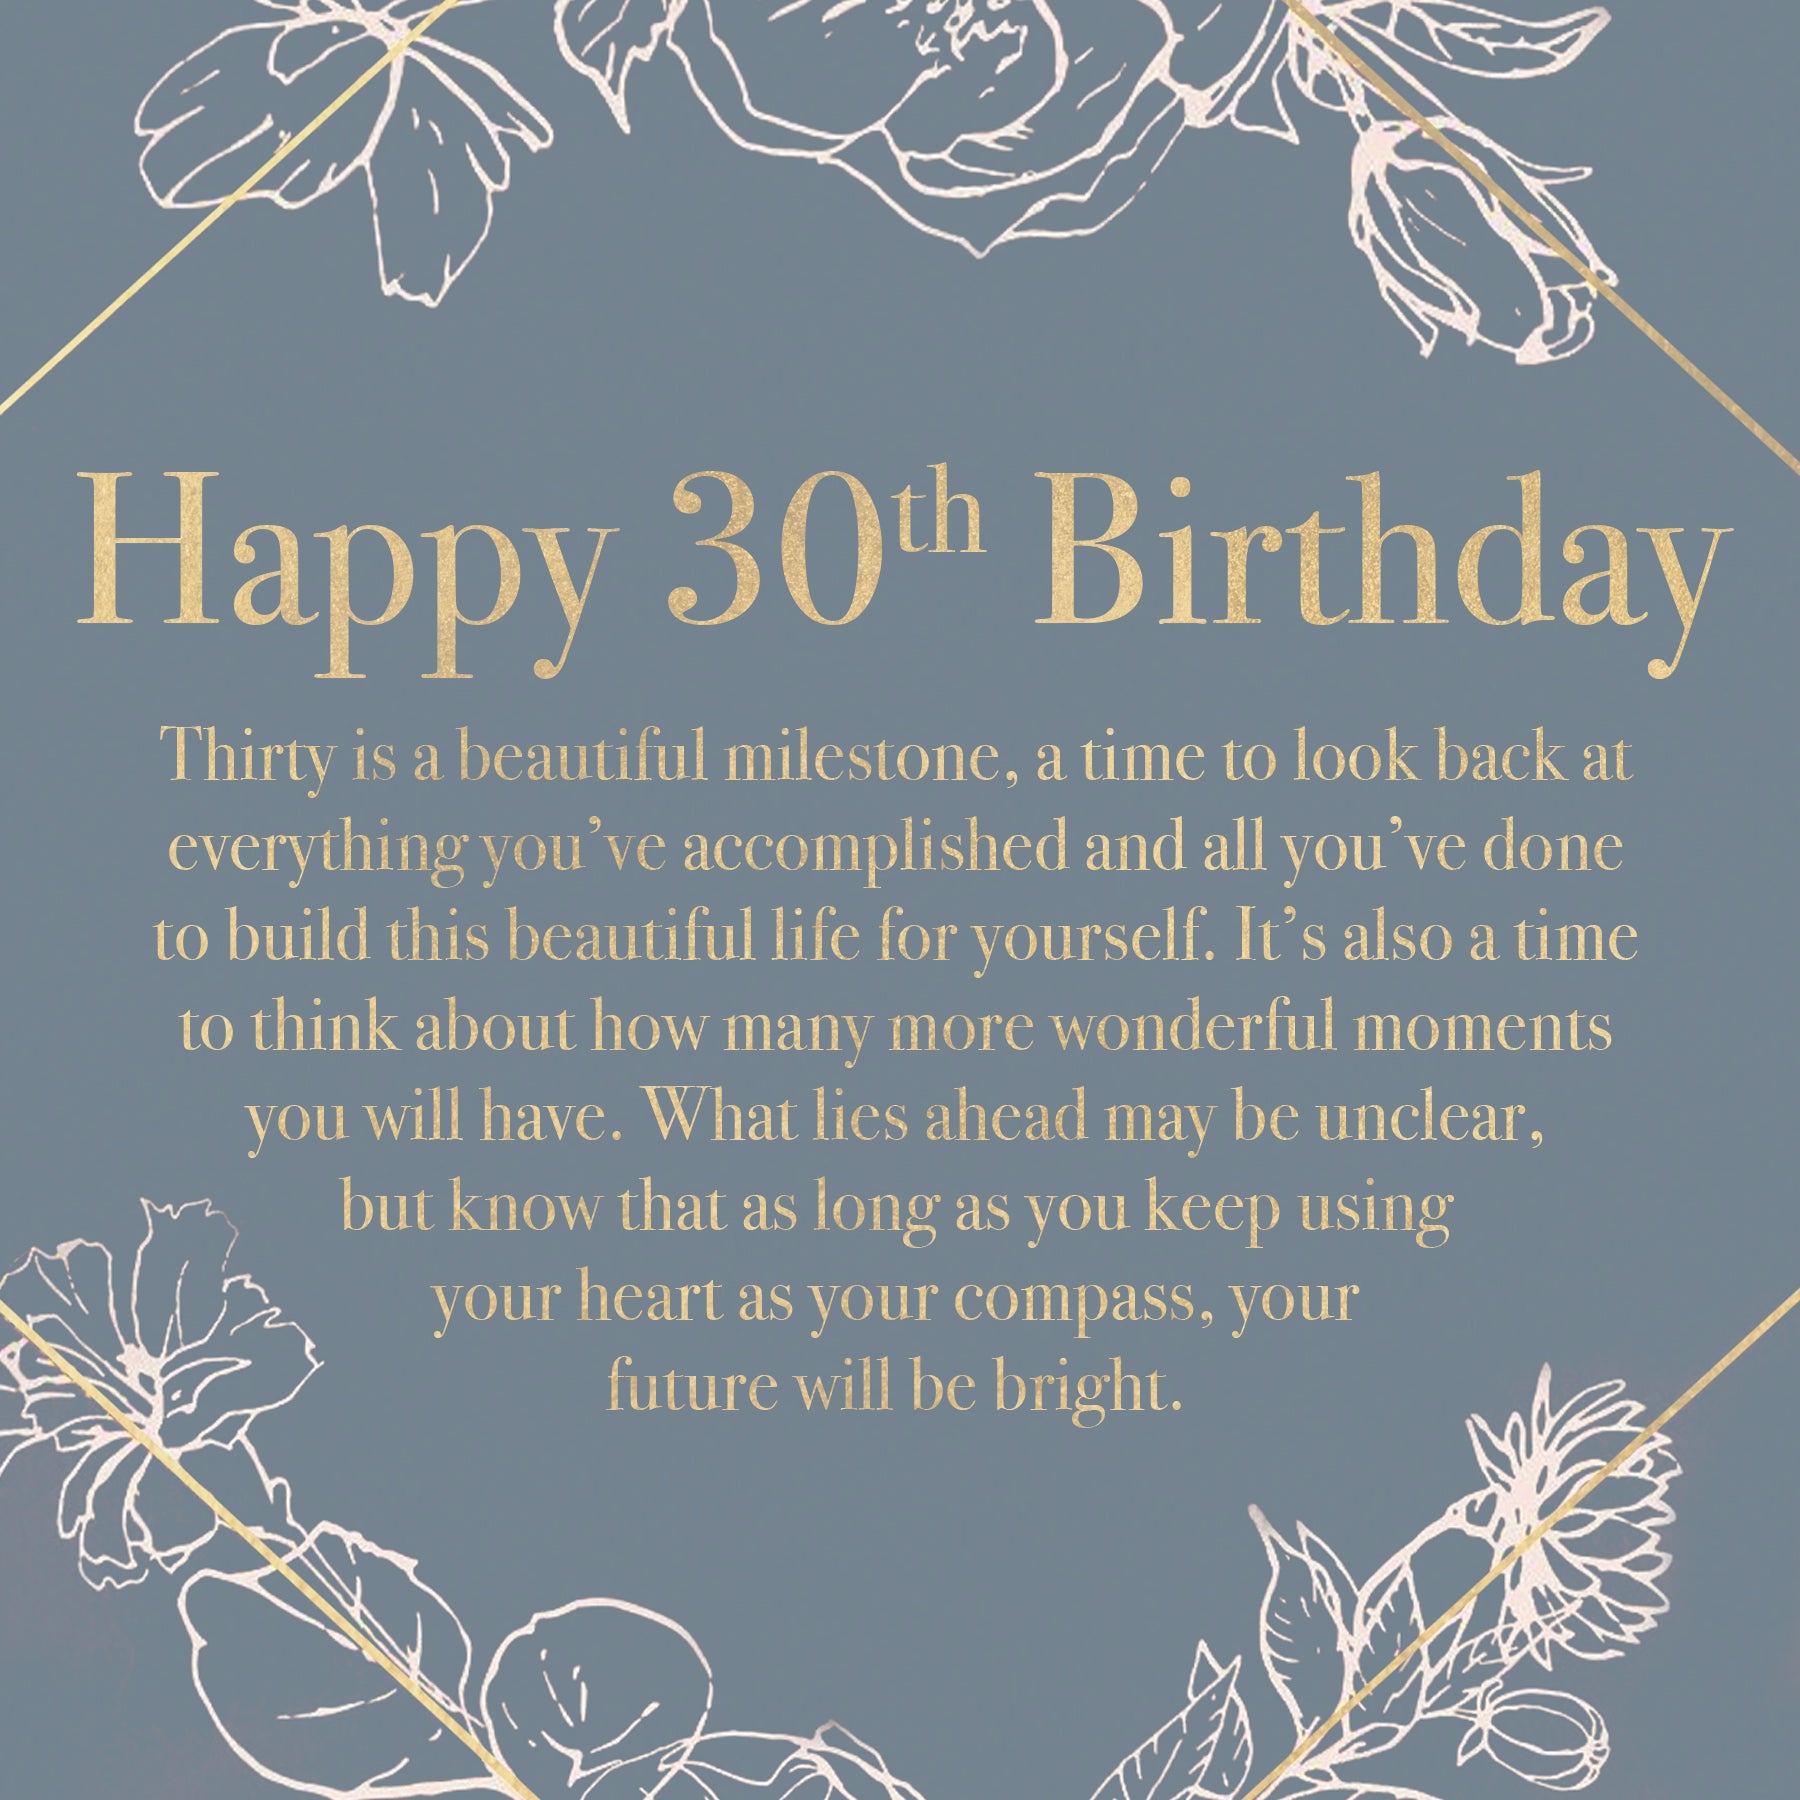 30th Birthday Gift for Women, 30th Birthday Spa Gift Box, 30th